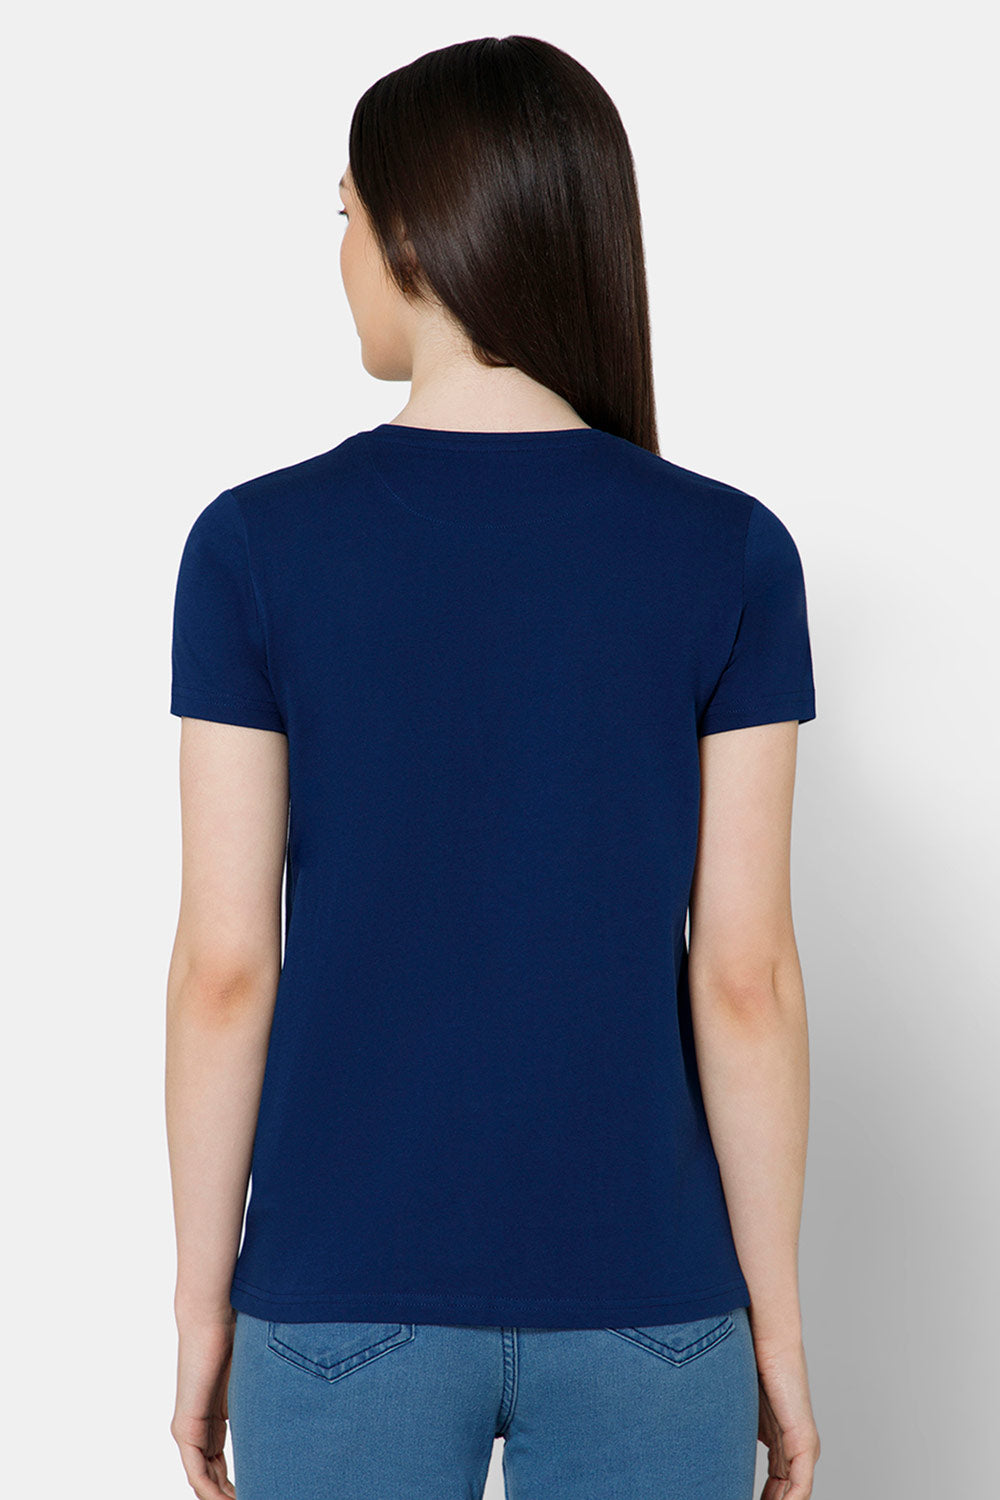 Jusperf Women's Printed Crew Neck Casual T-Shirt - Blue - TS31